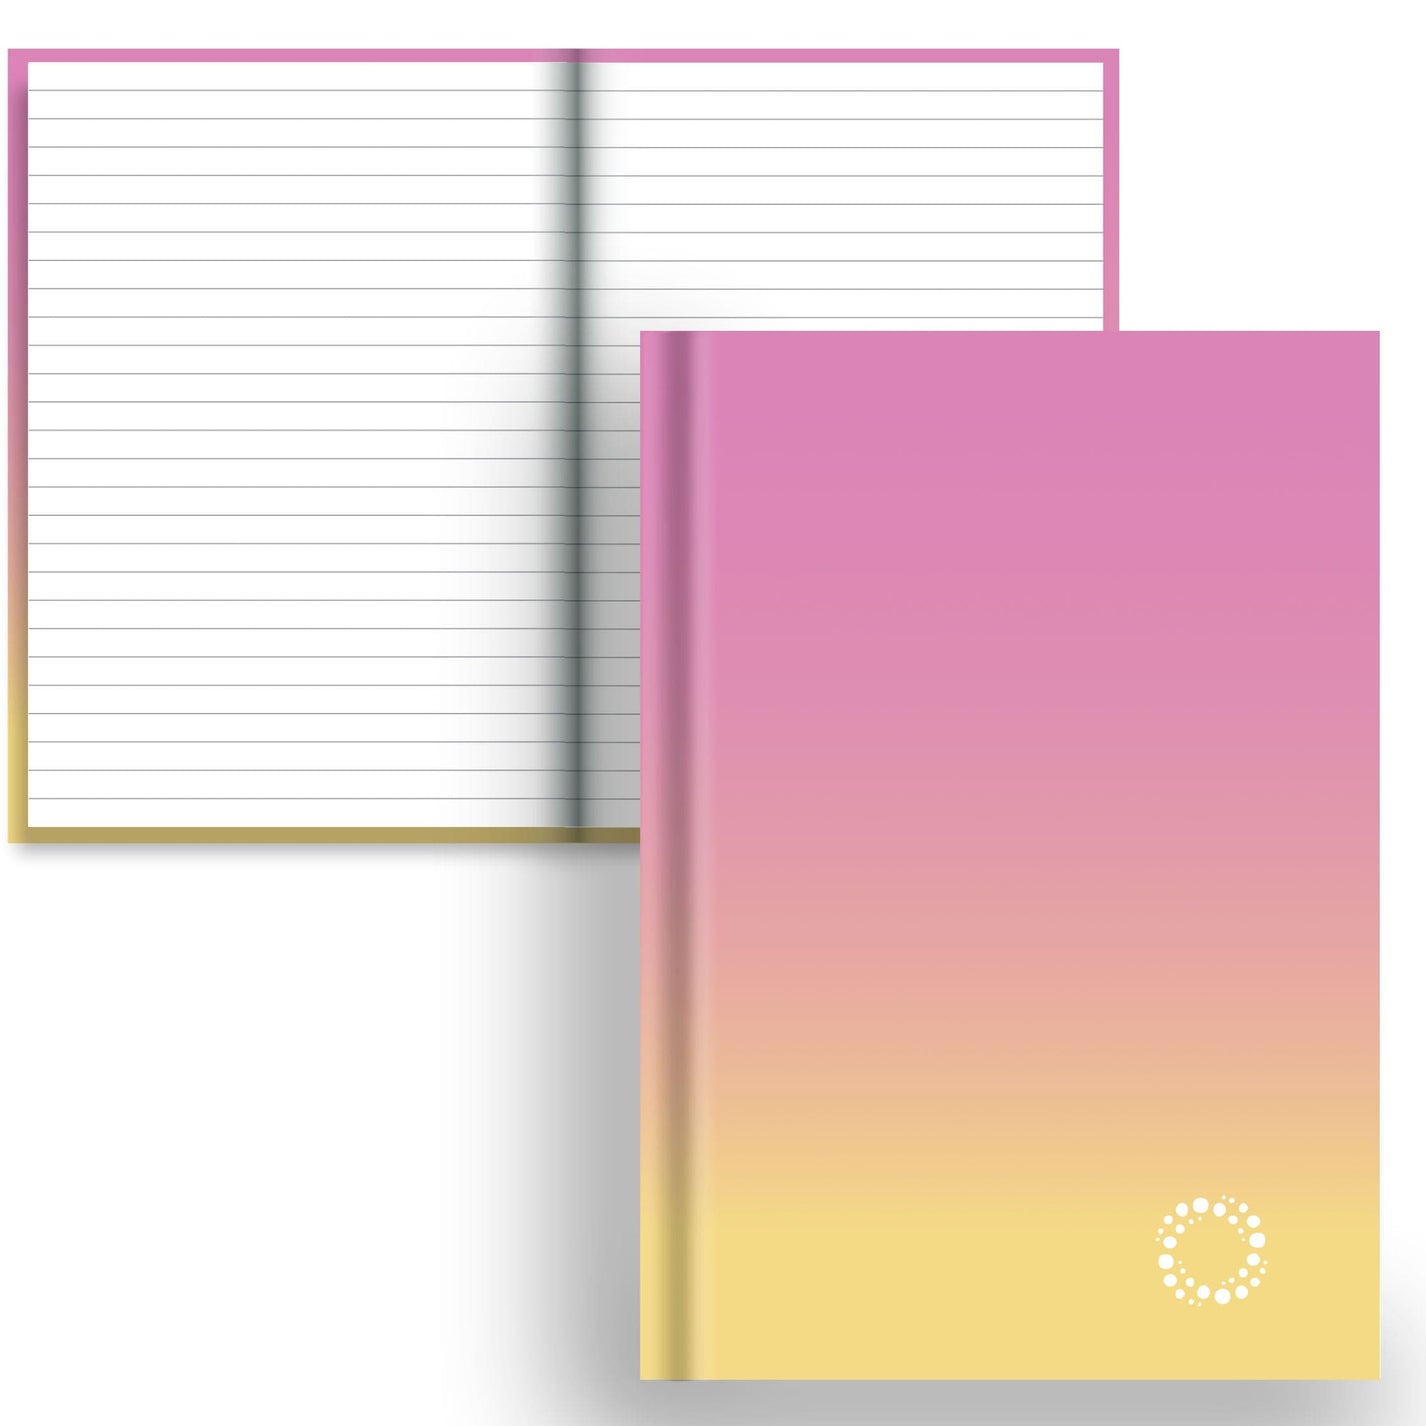 DayDot Journals Colour Fade Lined Paper Blossom and Lemonade - A5 Hardcover Notebook